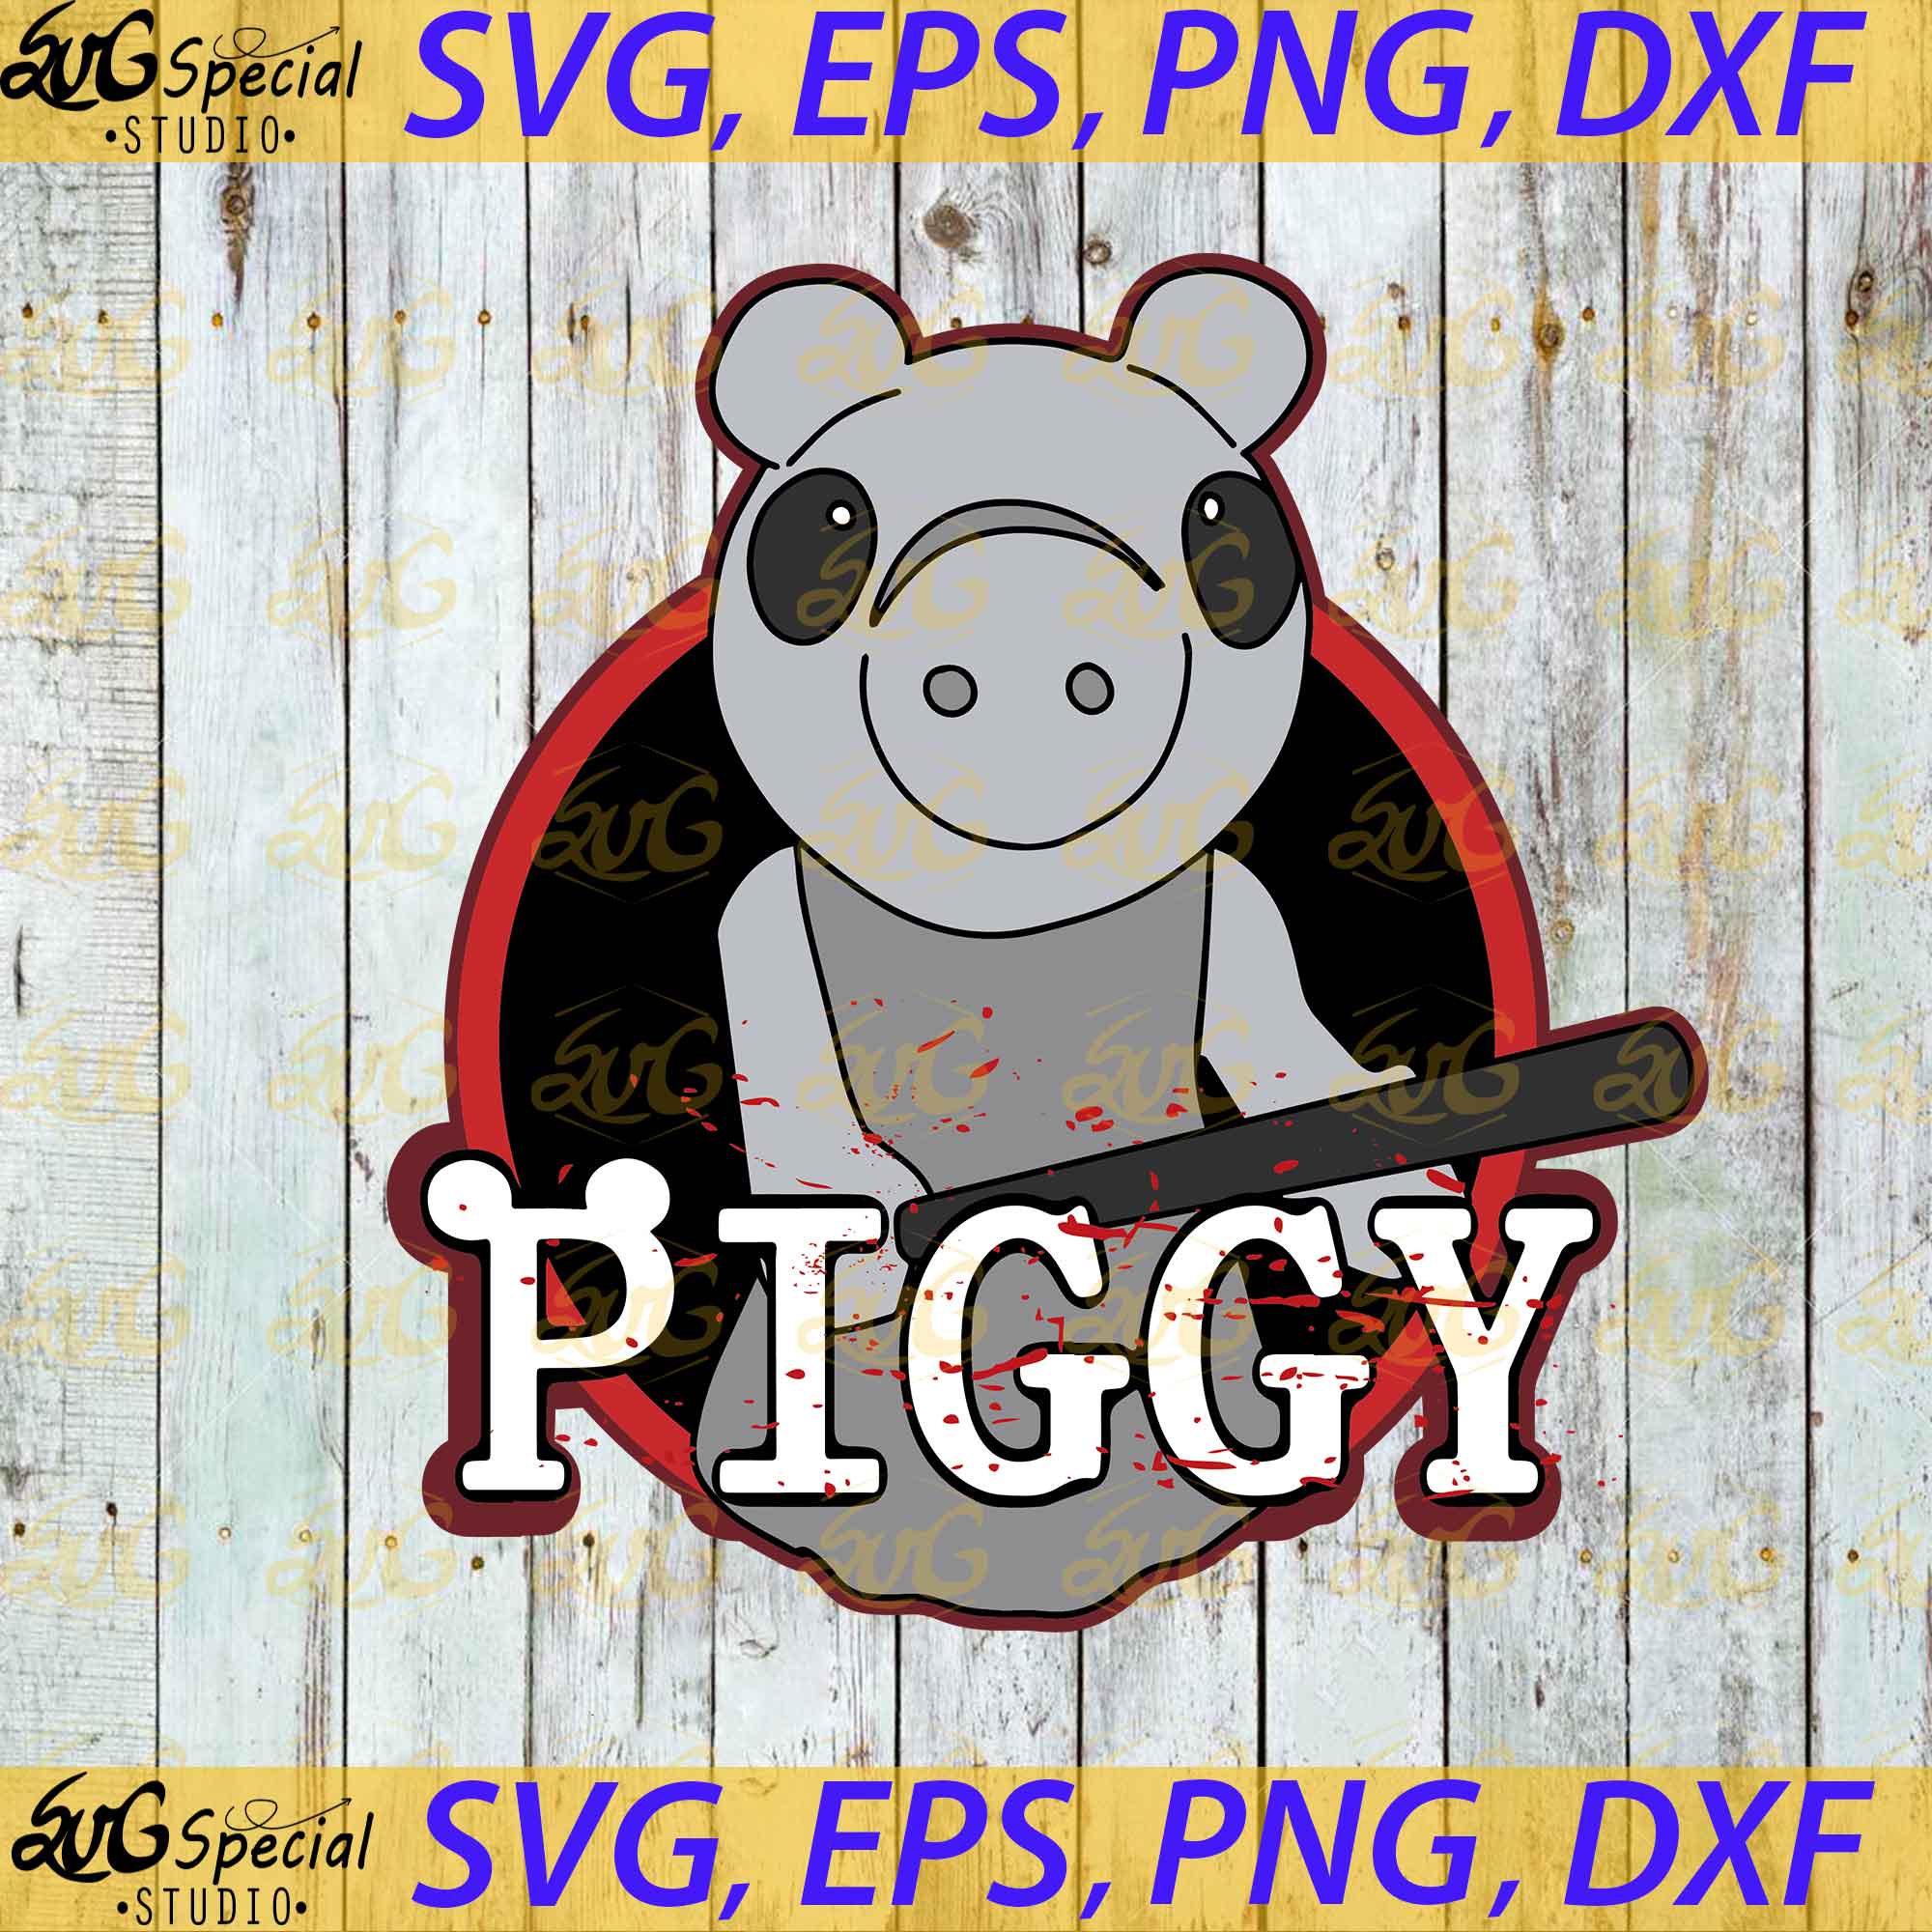 Piggy Roblox Svg, Piggy Svg, Piggy Horror Roblox Svg, Roblox - Inspire  Uplift